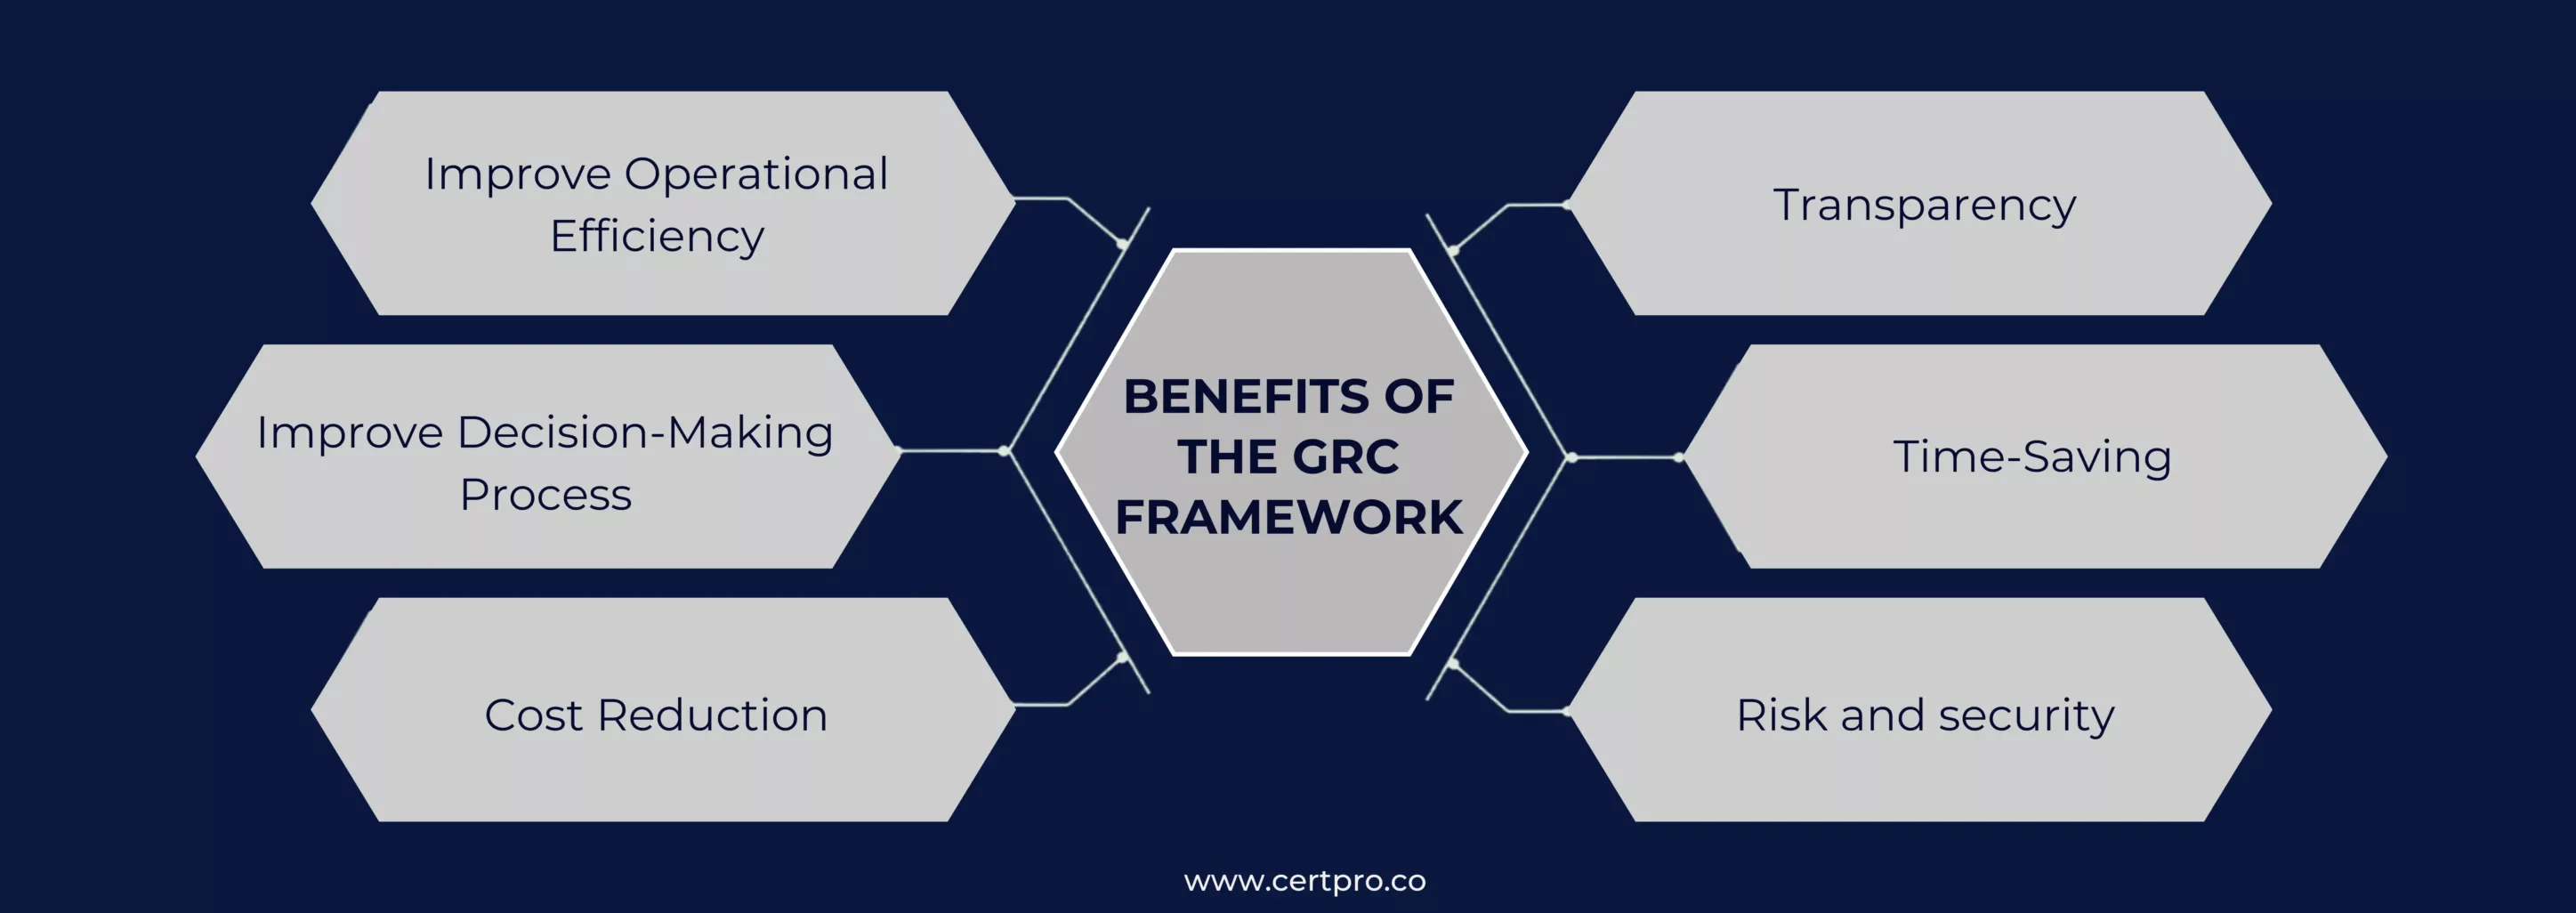 BENEFITS OF THE GRC FRAMEWORK